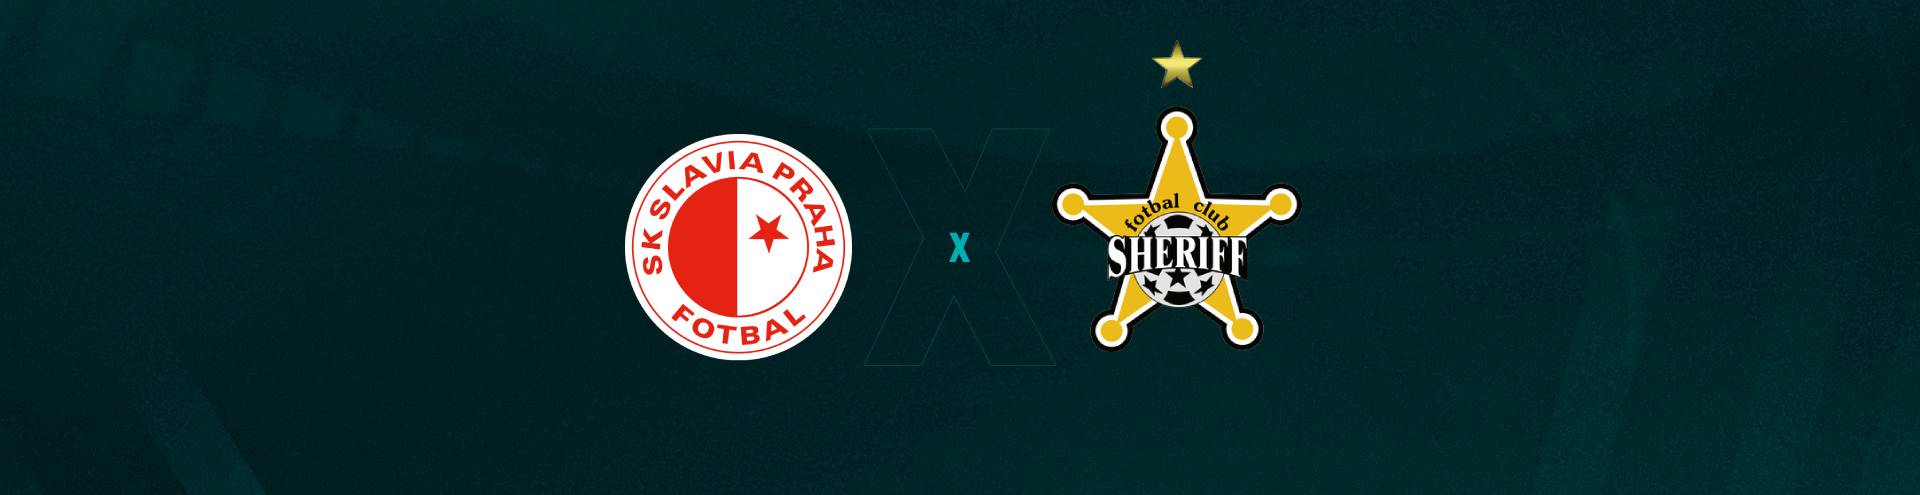 FC Sheriff Tiraspol x SK Slavia Praga » Placar ao vivo, Palpites,  Estatísticas + Odds